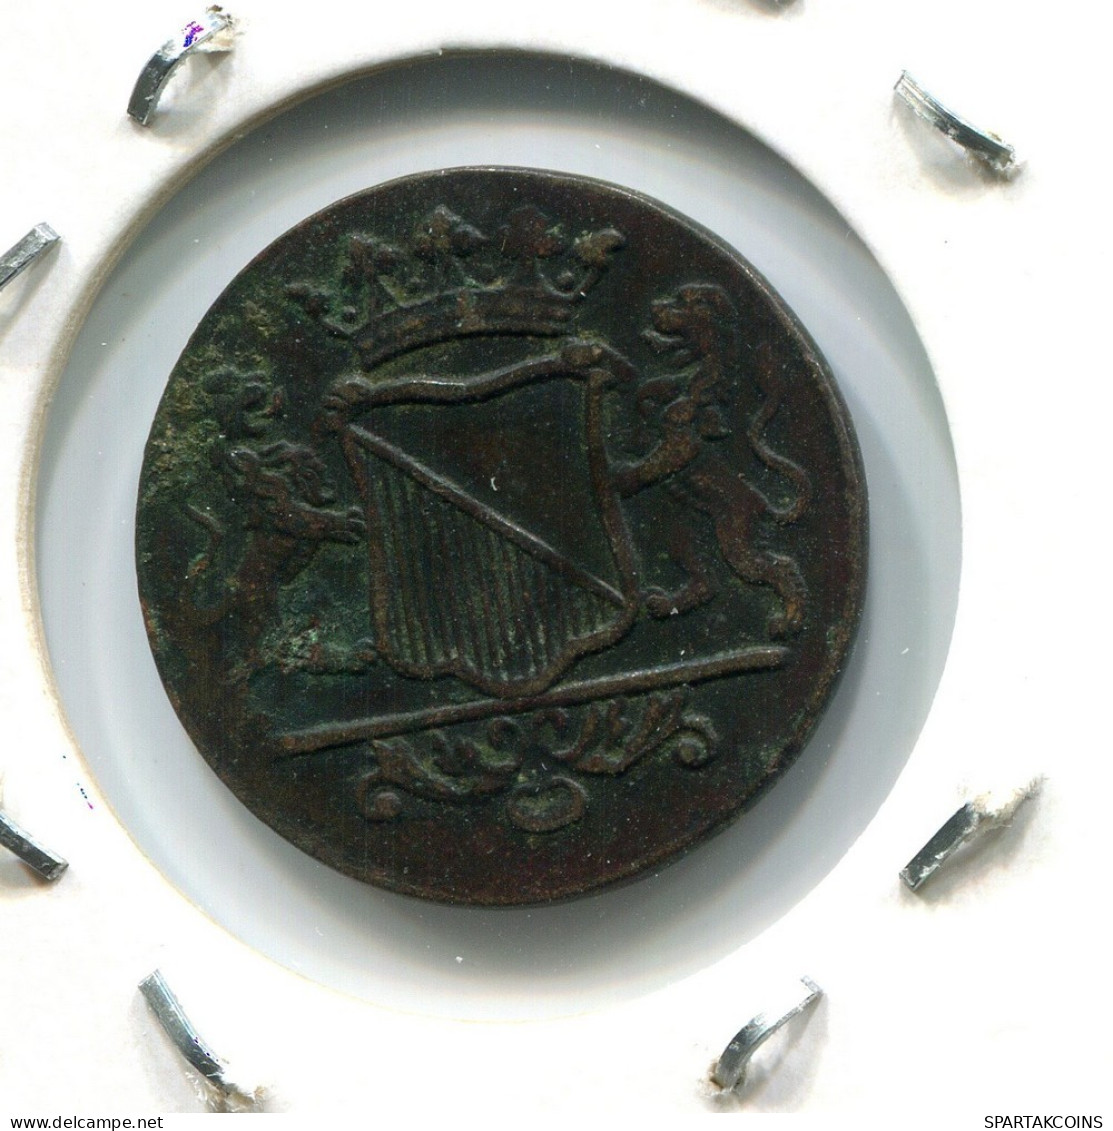 1754 UTRECHT VOC DUIT NEERLANDÉS NETHERLANDS Colonial Moneda #VOC1568.10.E.A - Dutch East Indies